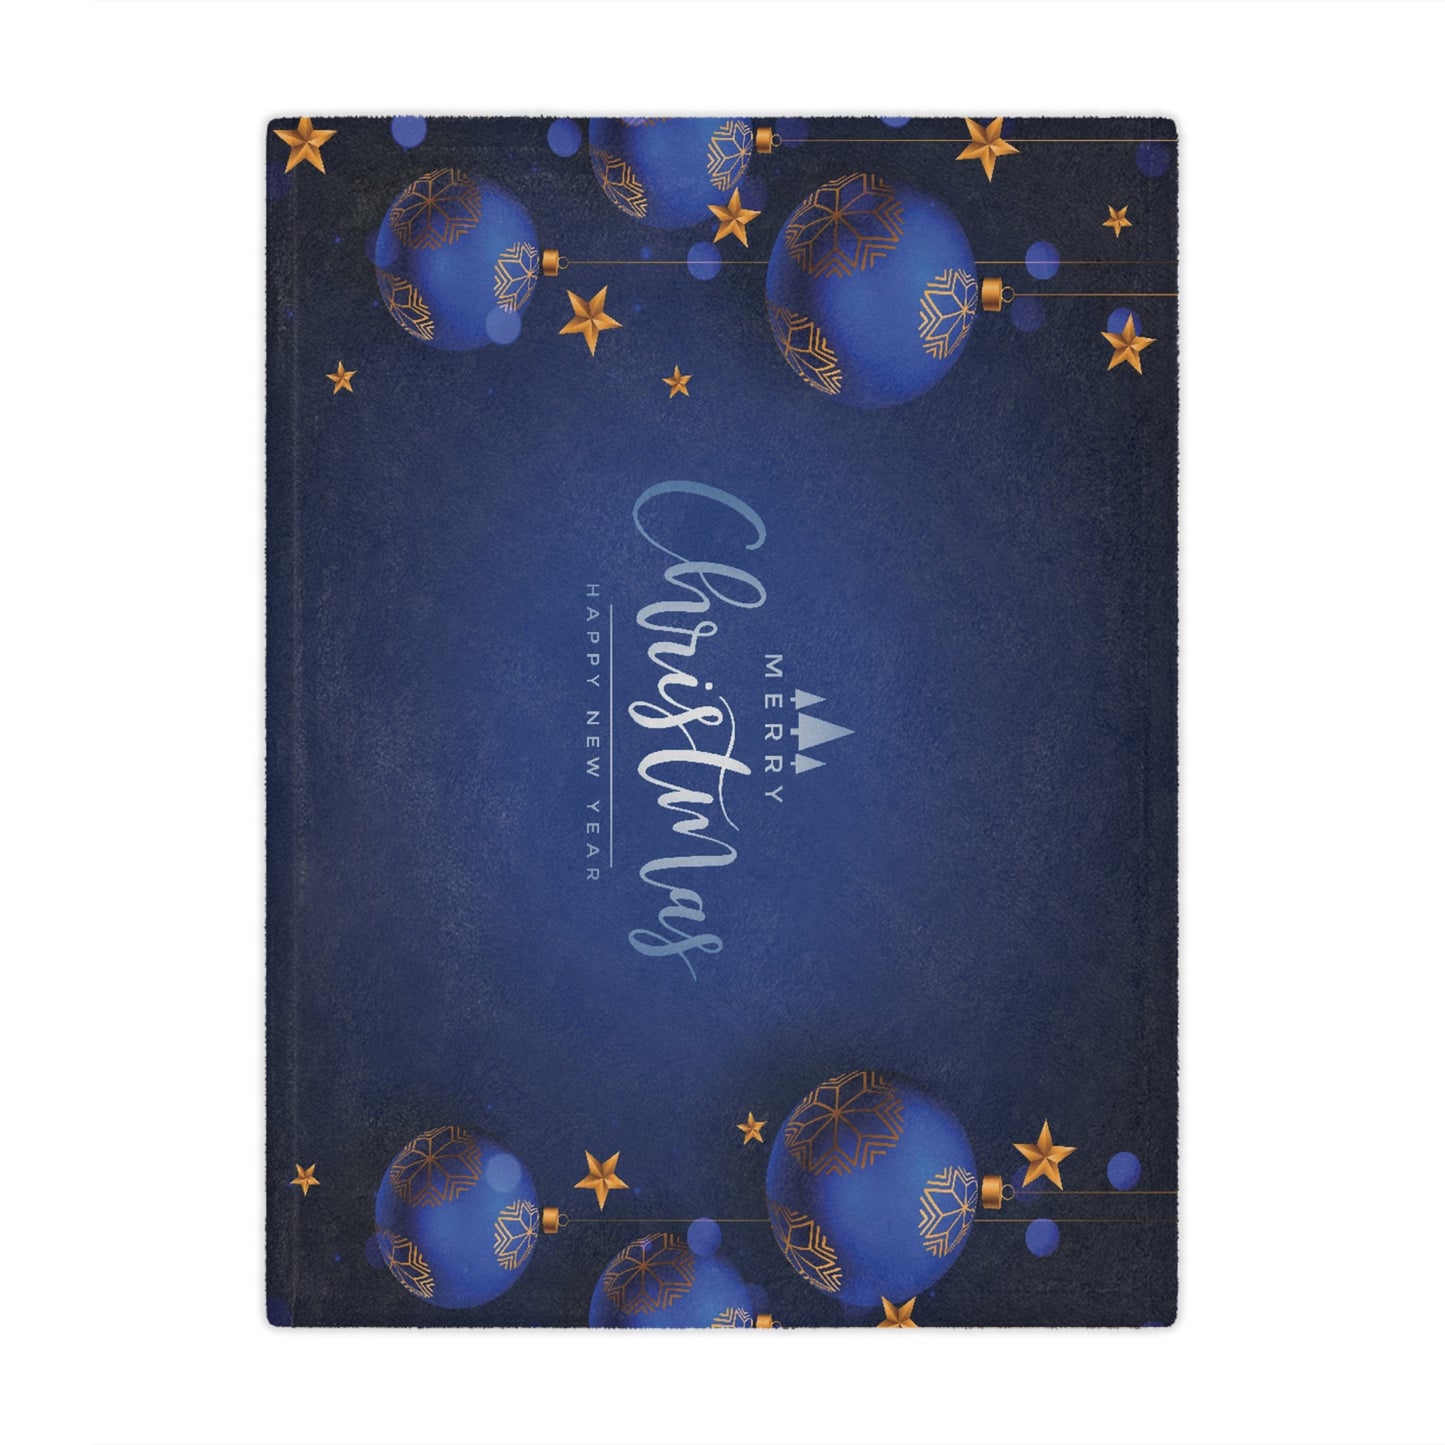 Dark Blue Christmas Minky Blanket